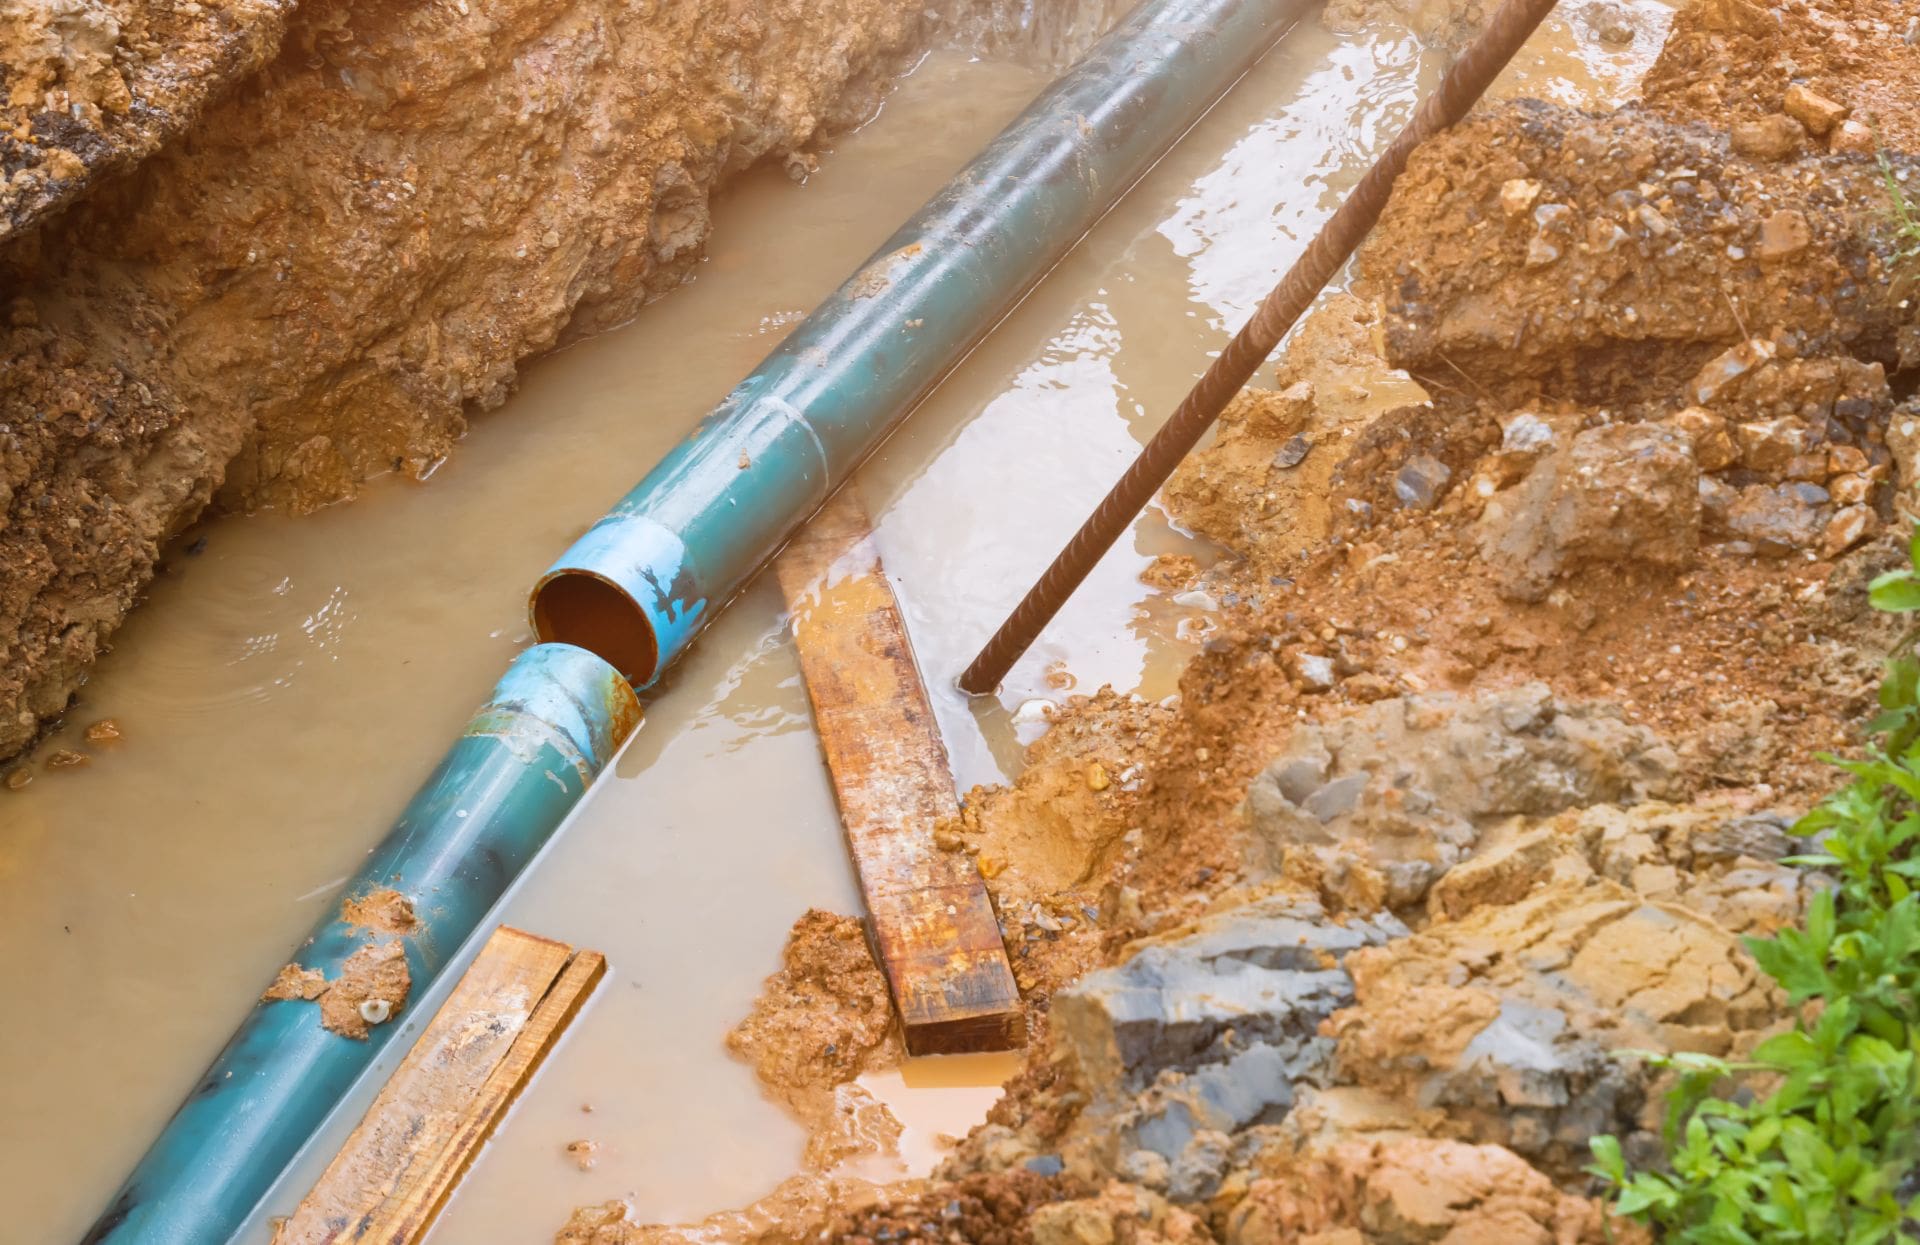 Repair the plumbing broken pipe and water flow in hole